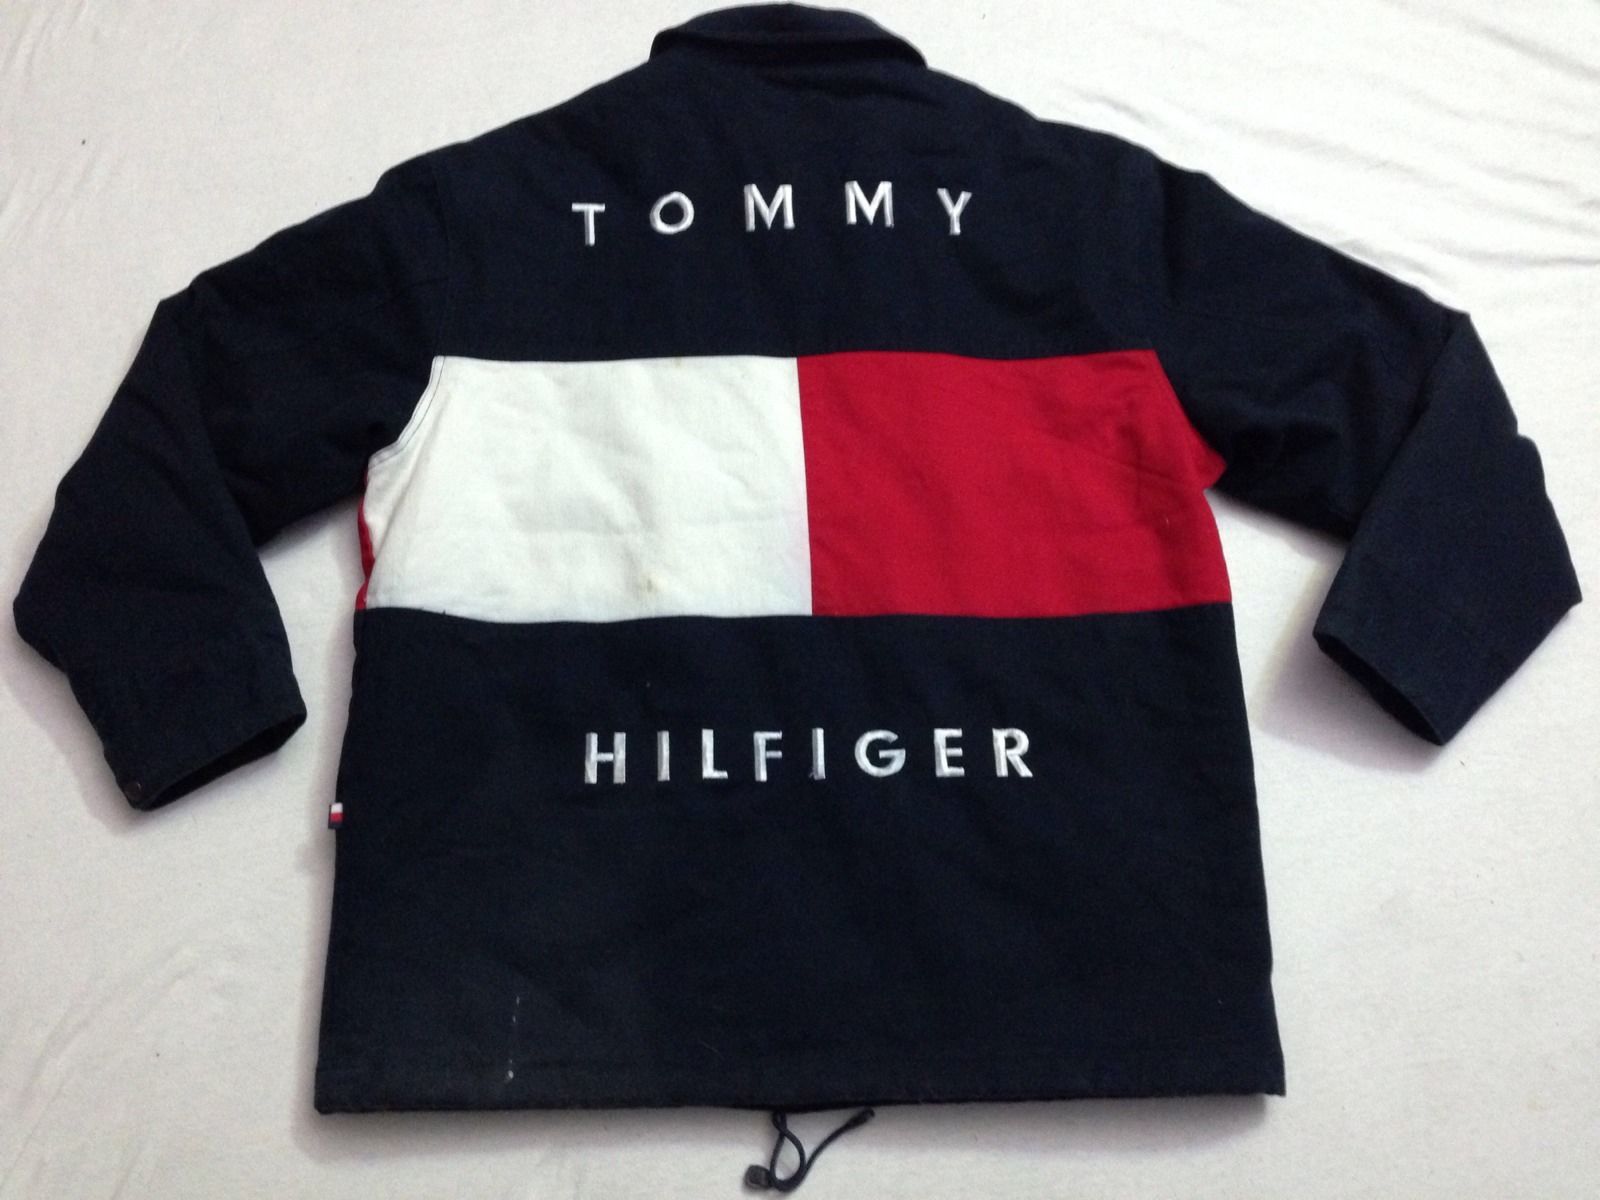 best tommy hilfiger jackets